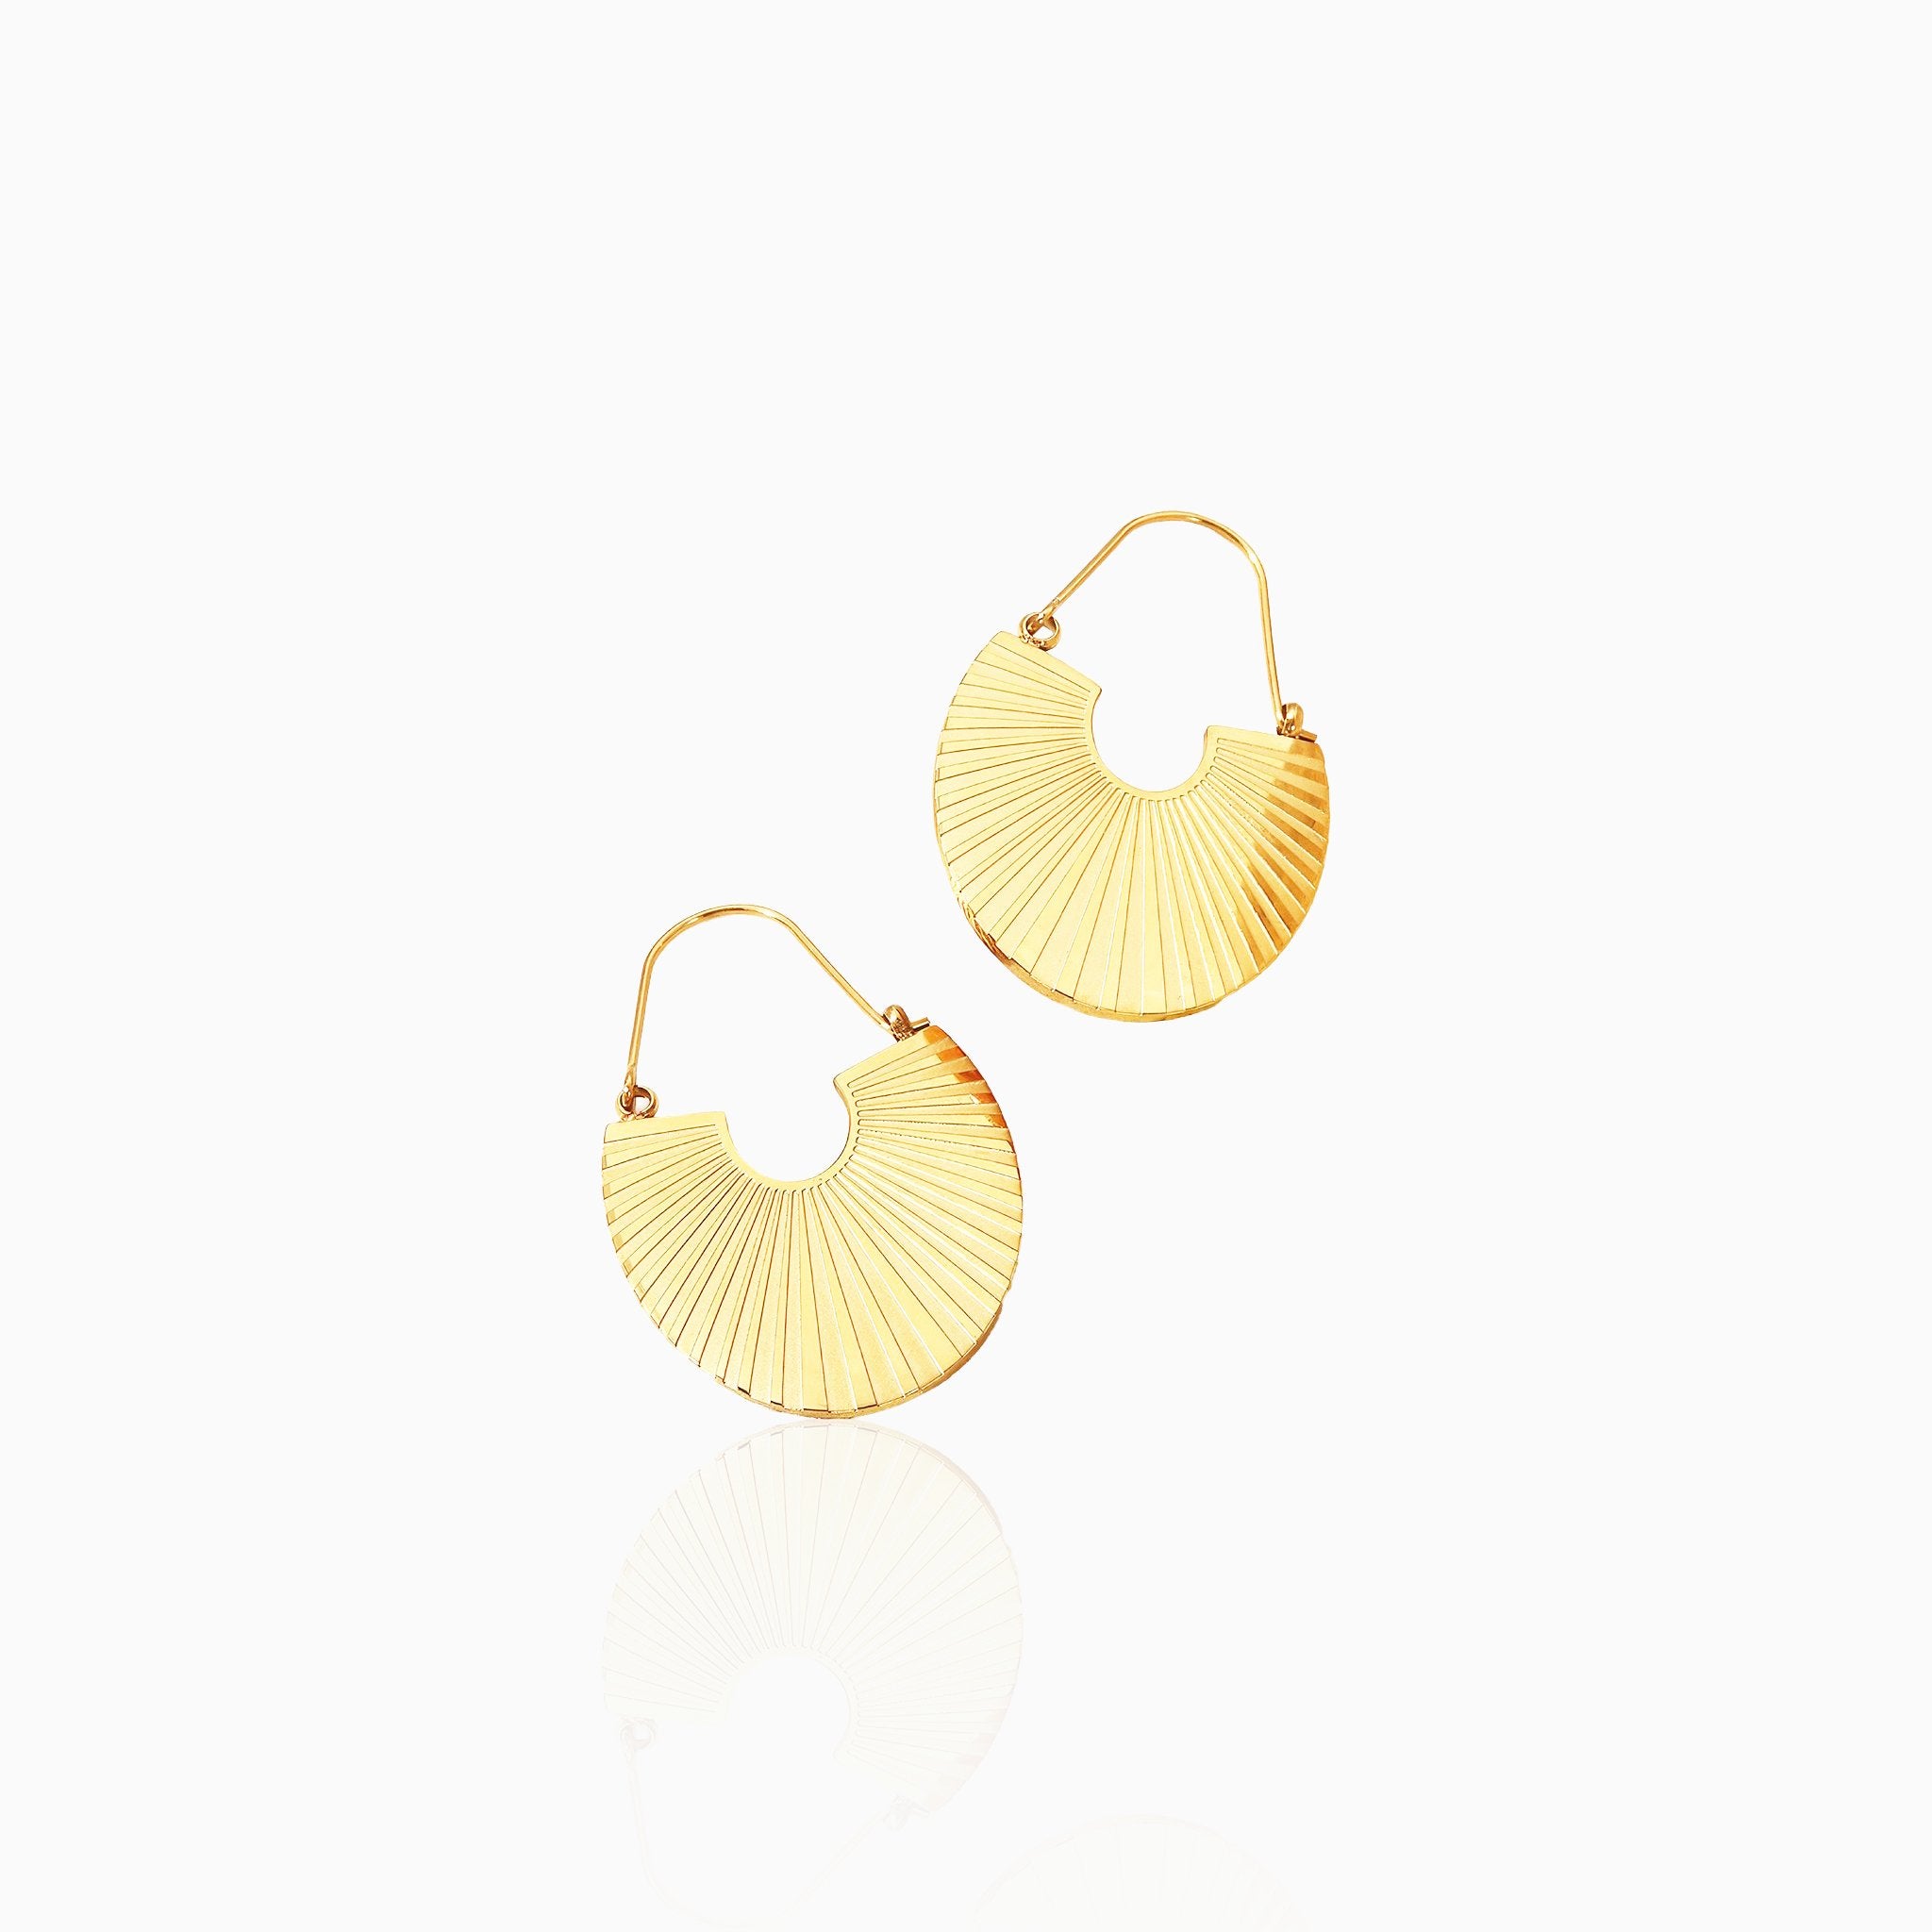 Nordic Sunburst Earrings - Nobbier - Earrings - 18K Gold And Titanium PVD Coated Jewelry